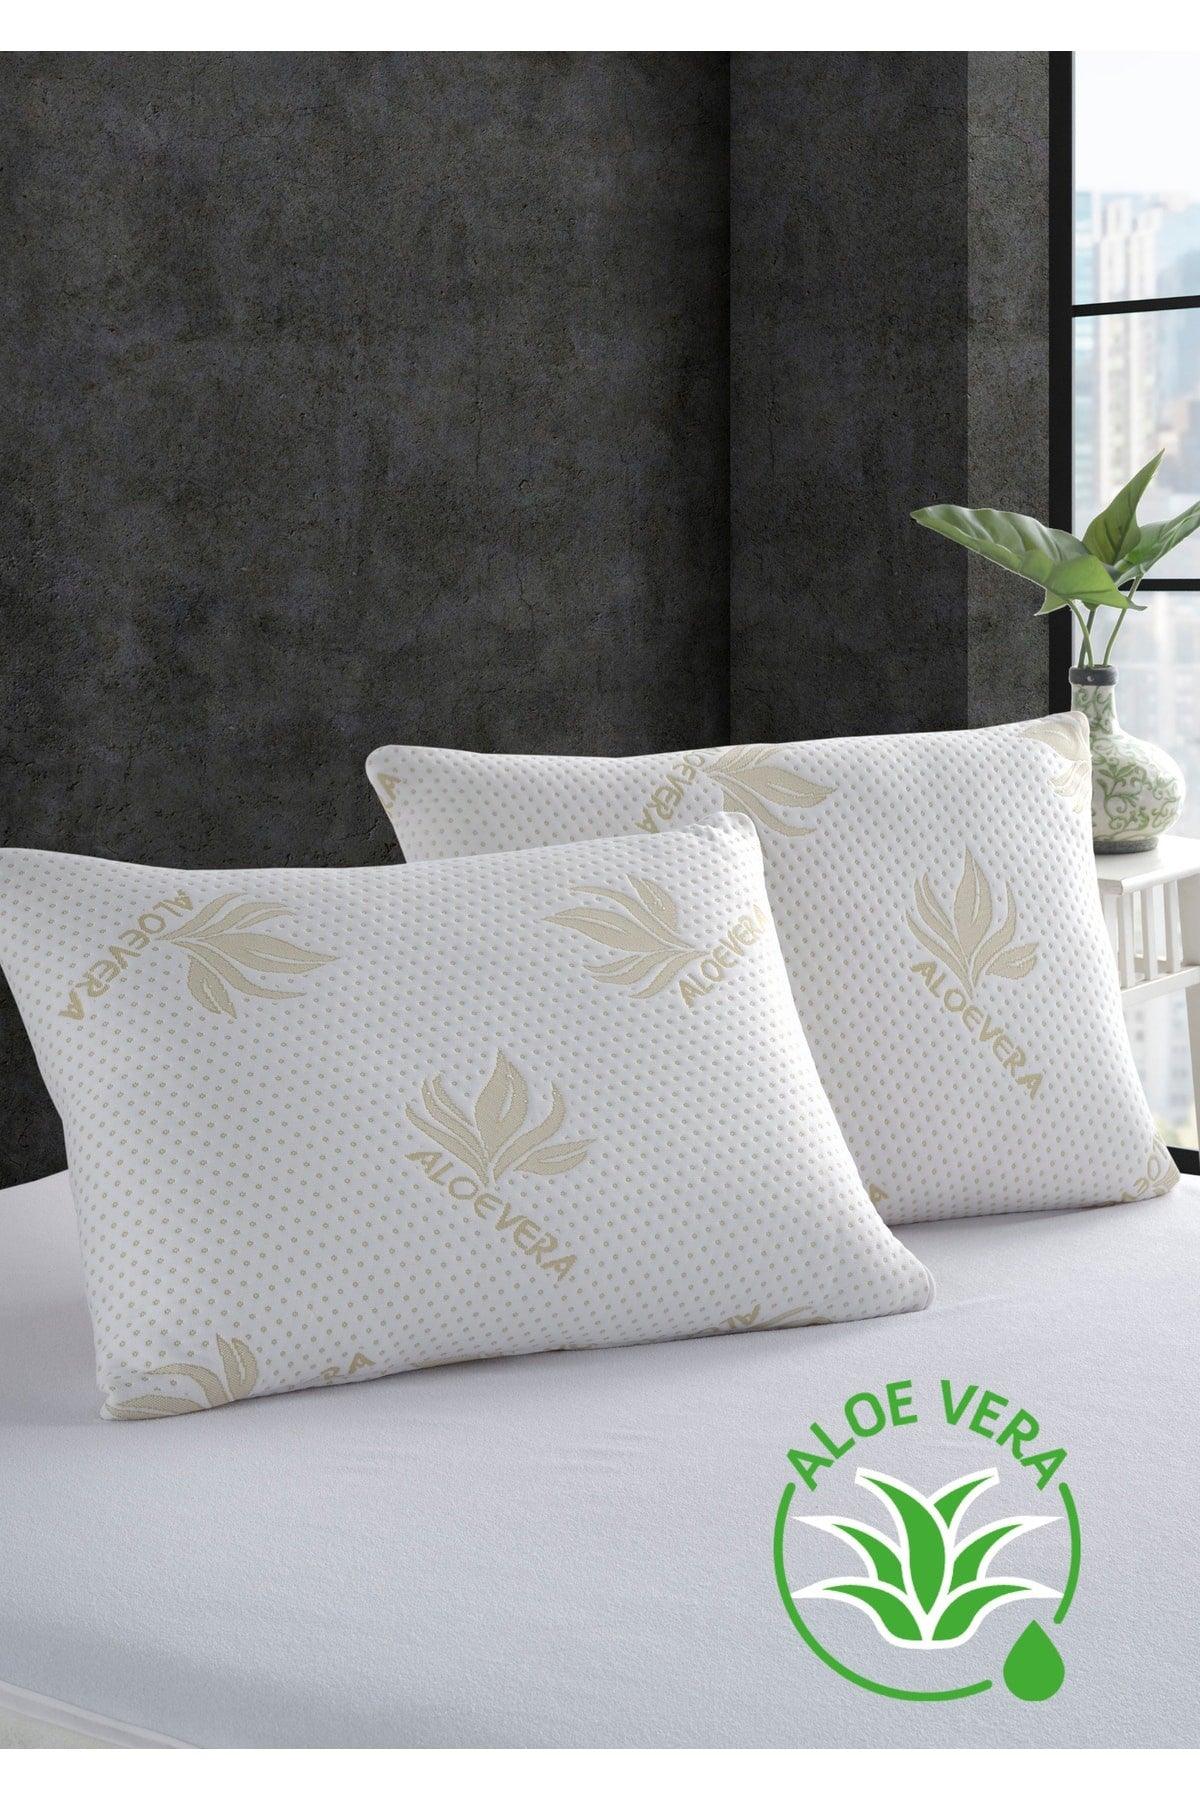 Aloe Vera Pillow 1500 gr - Swordslife